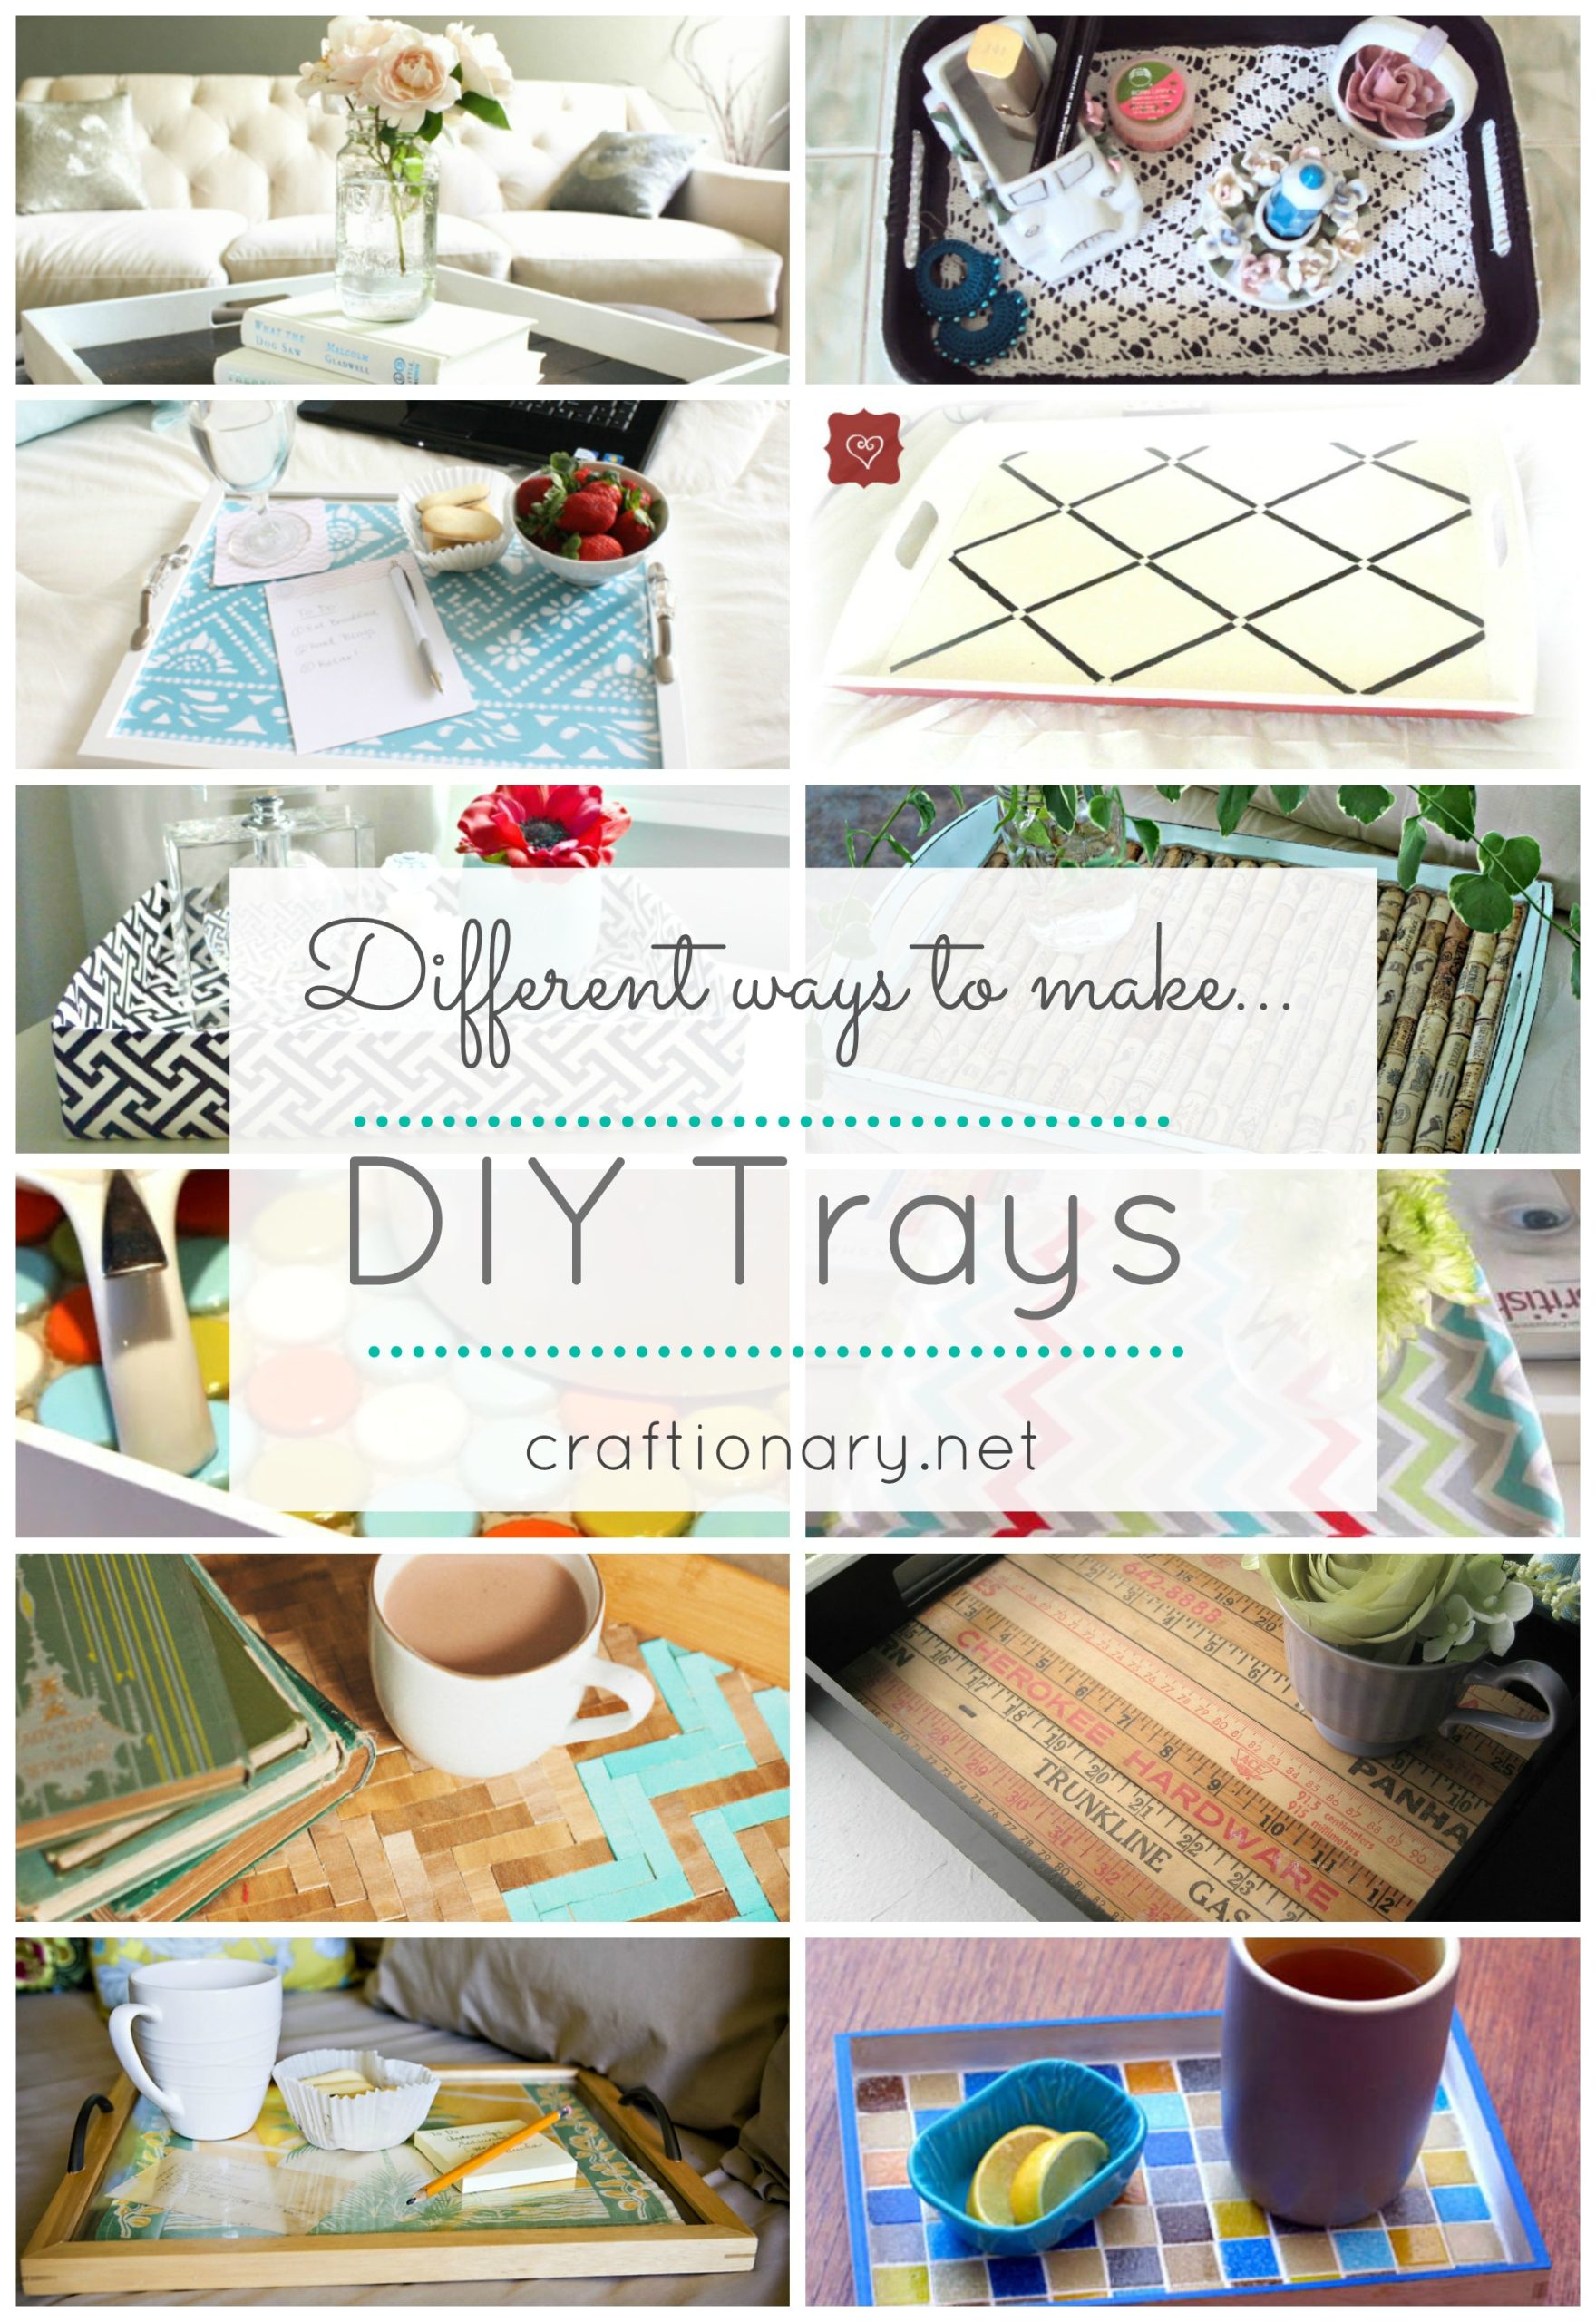 Ways To Use a Decorative Tray the Right Way!